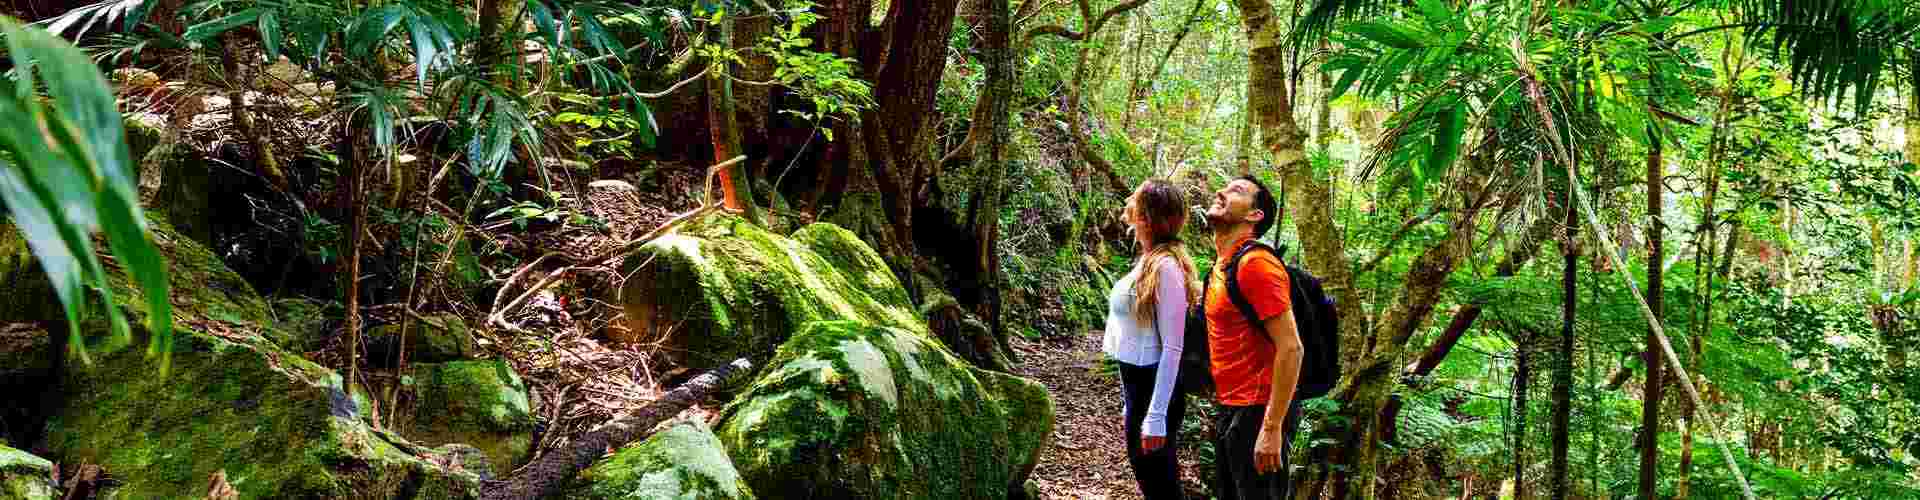 Travellers exploring the lush foliage of Lamington National Park 